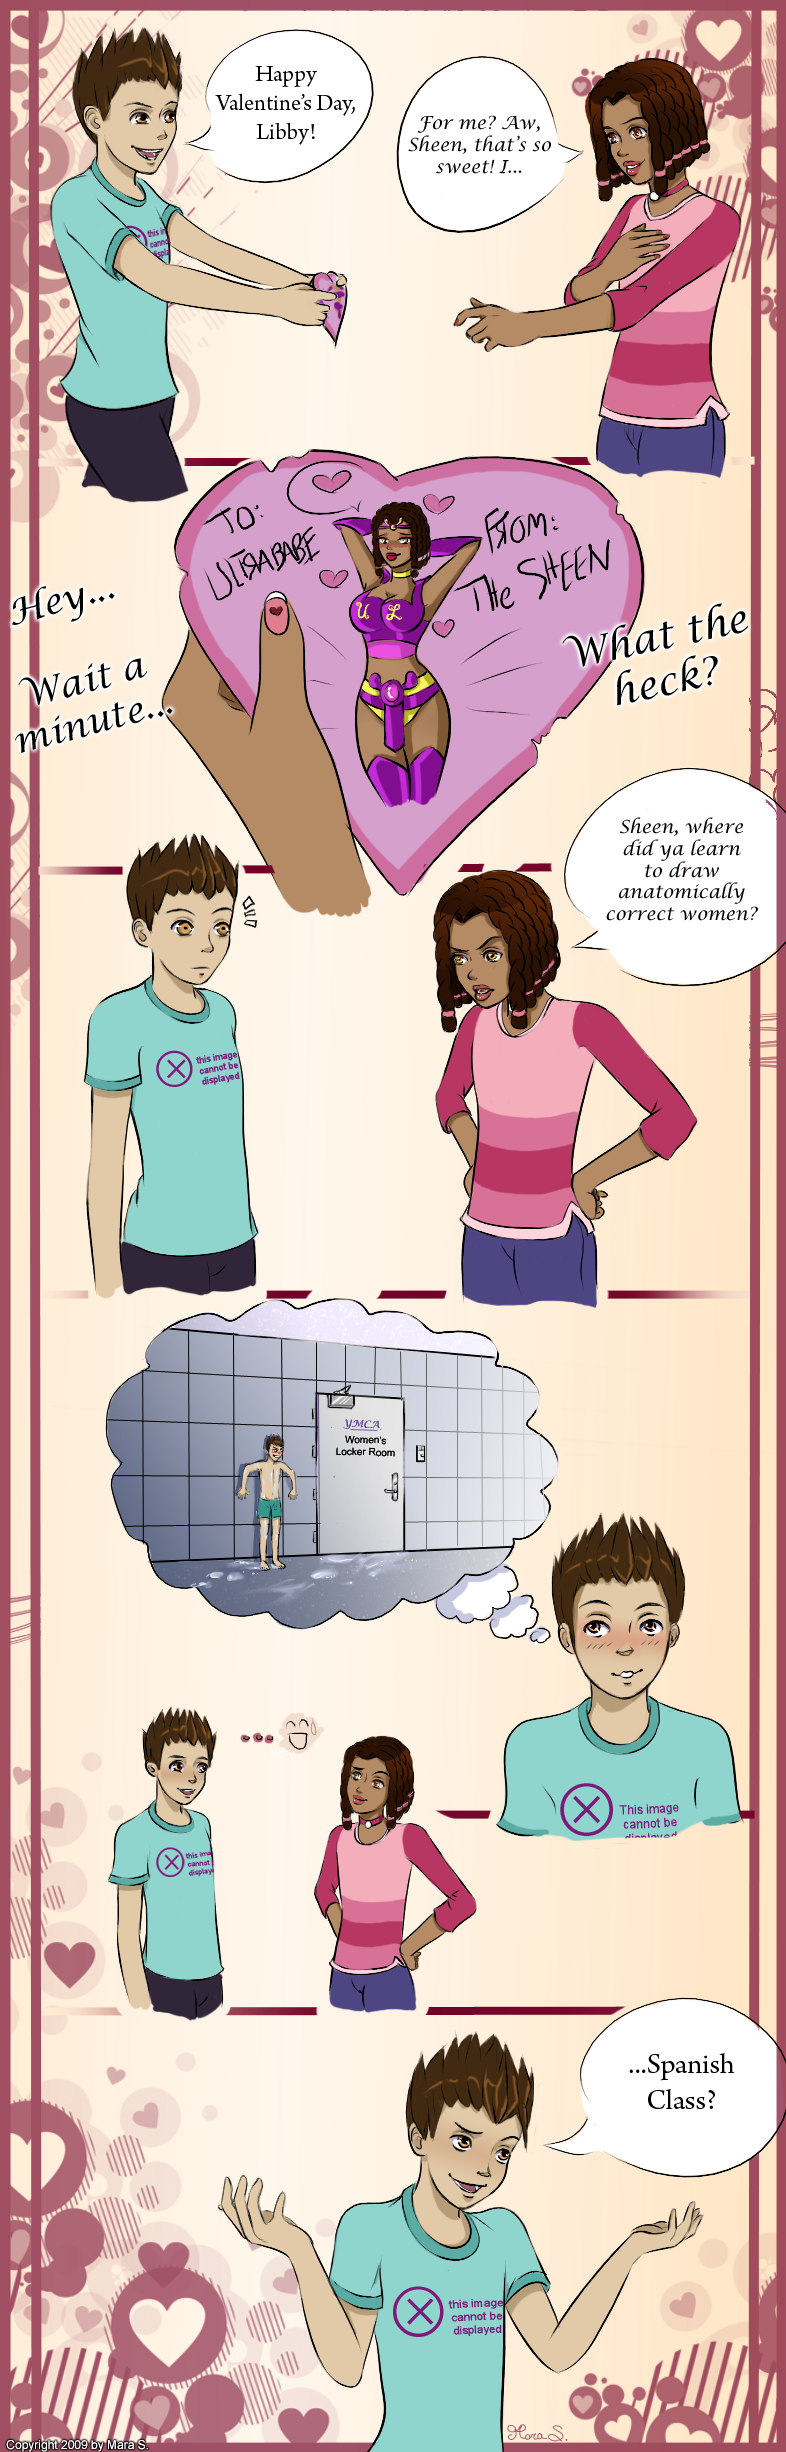 Sheen_Libby_Valentine_Comic_by_Acaciatho